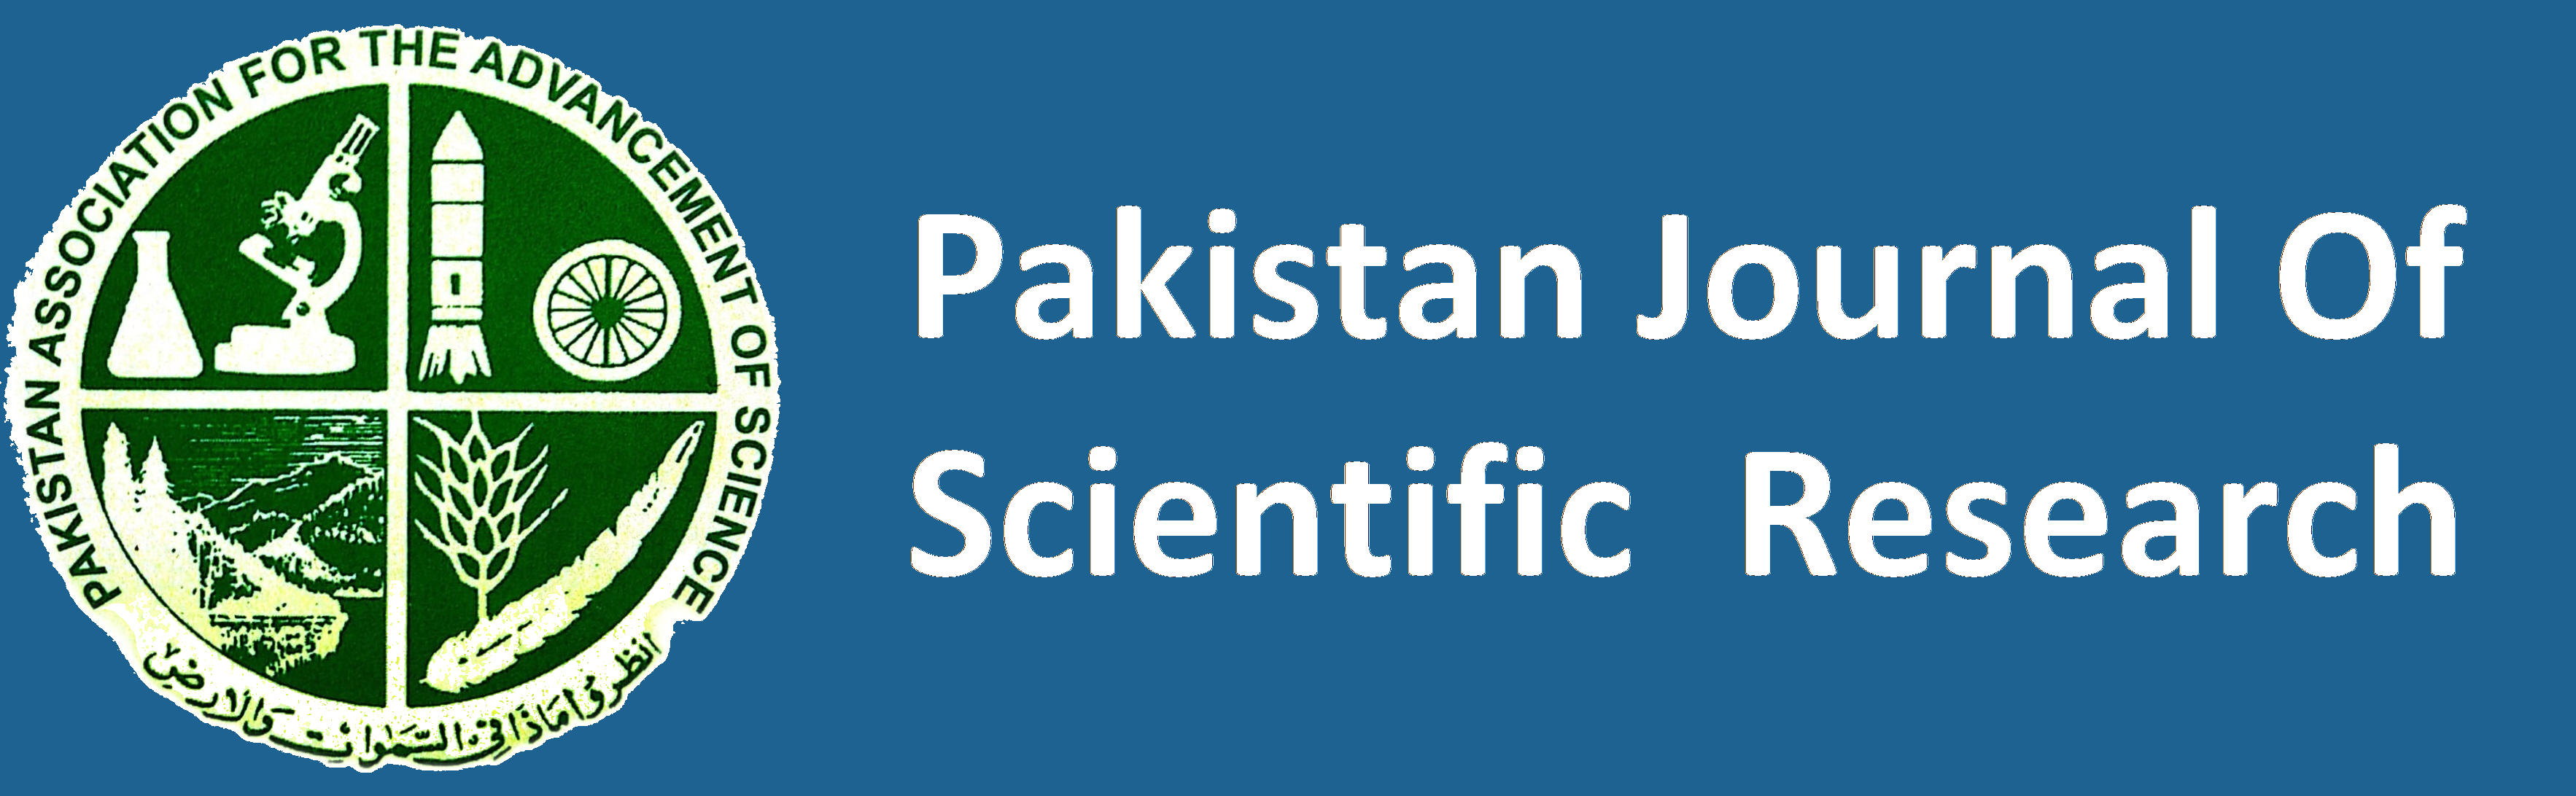 Pakistan Journal of Scientific Research